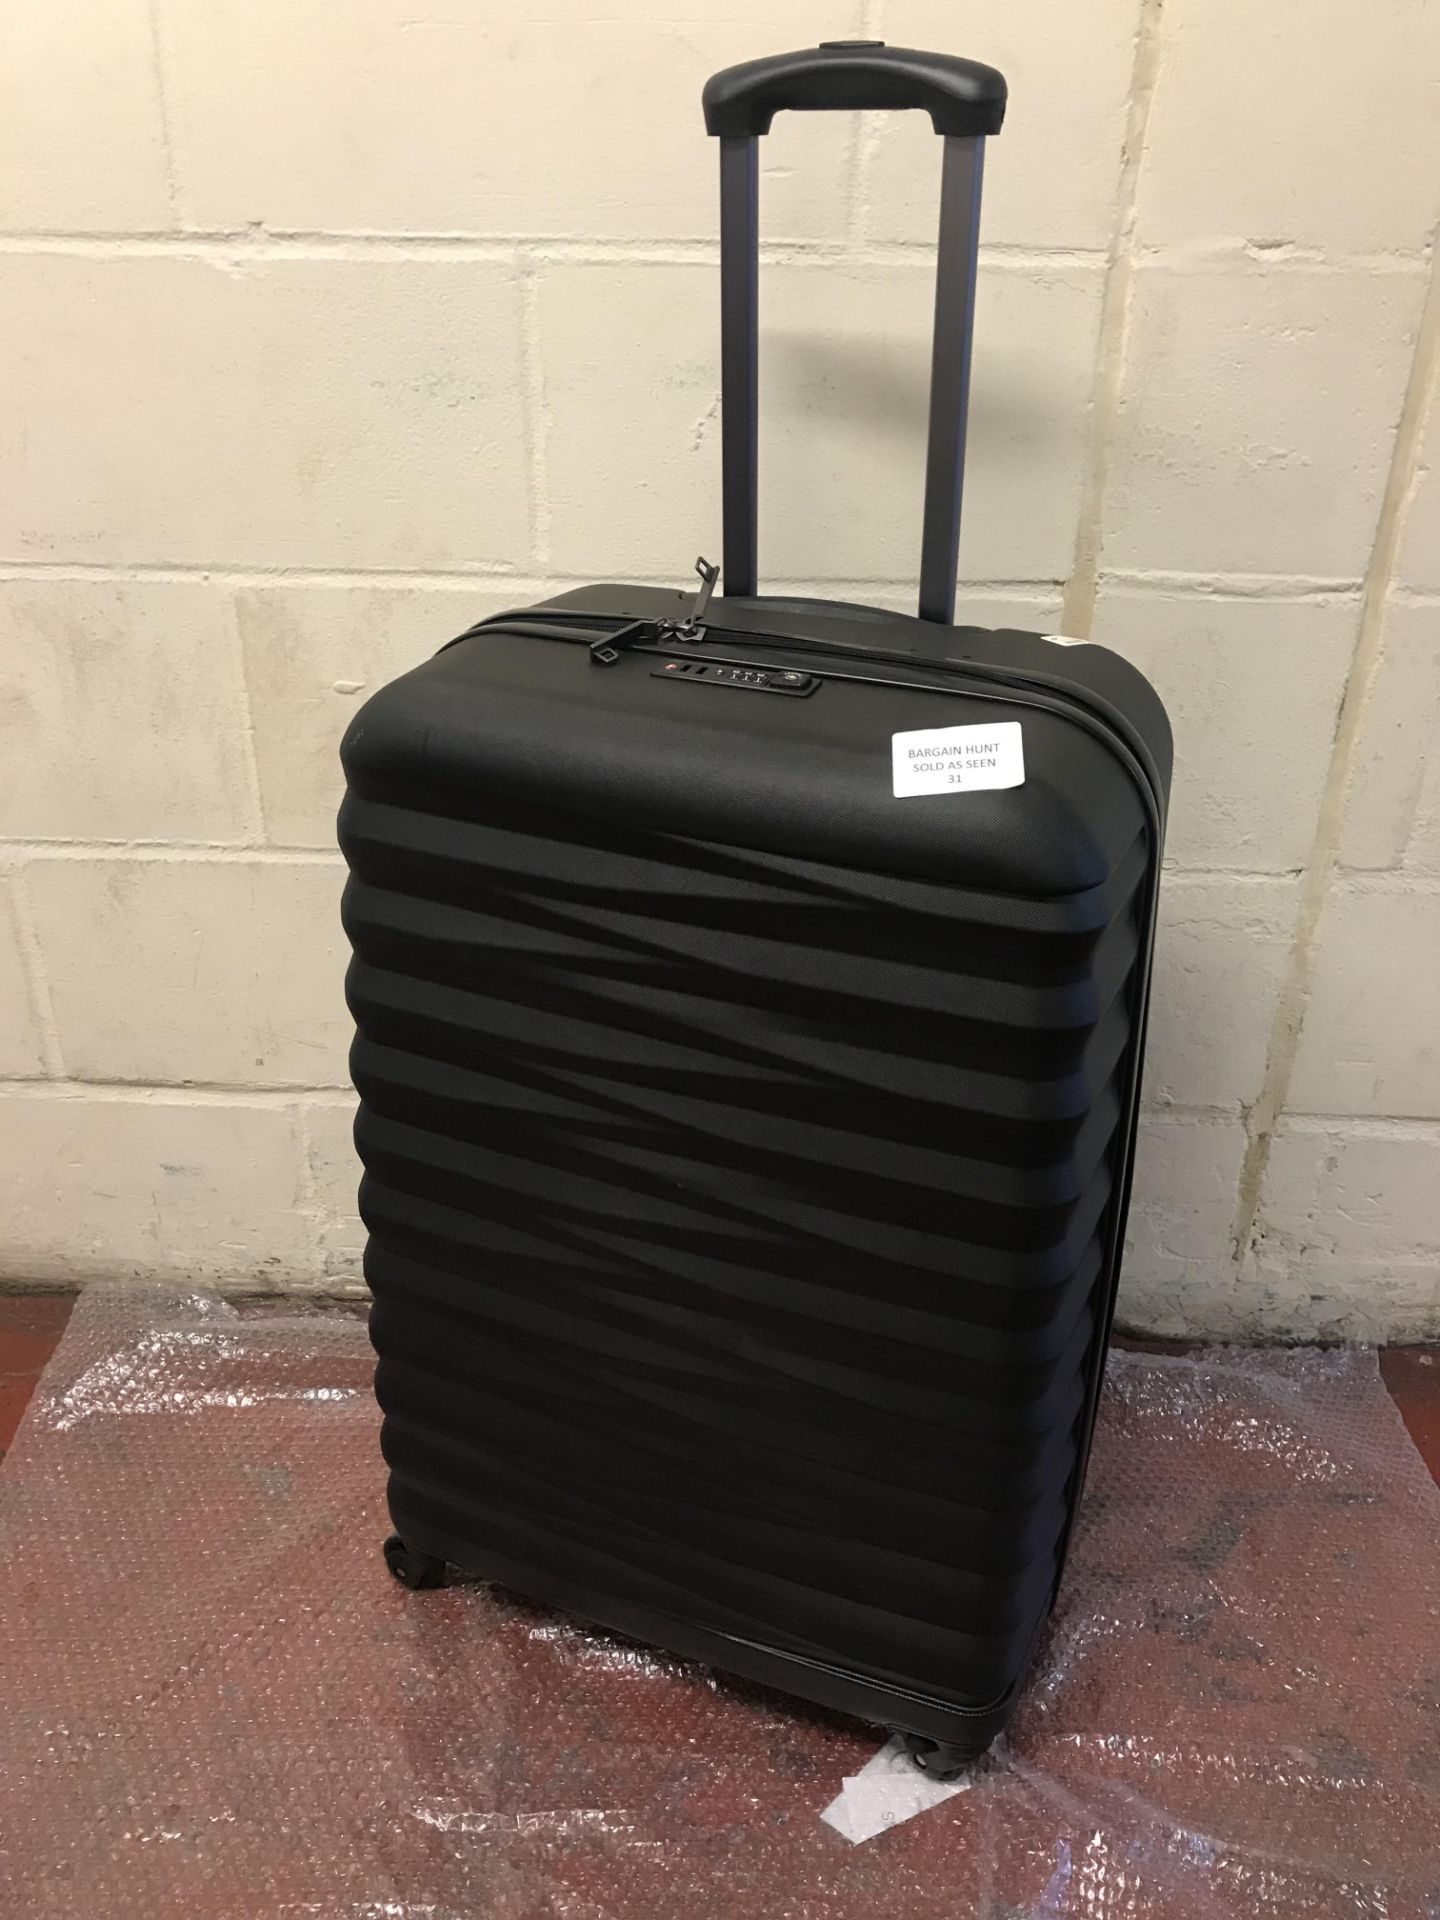 Large 4 Wheel Ultralight Hard Suitcase with Security Zip (handles broken, see image) RRP £119